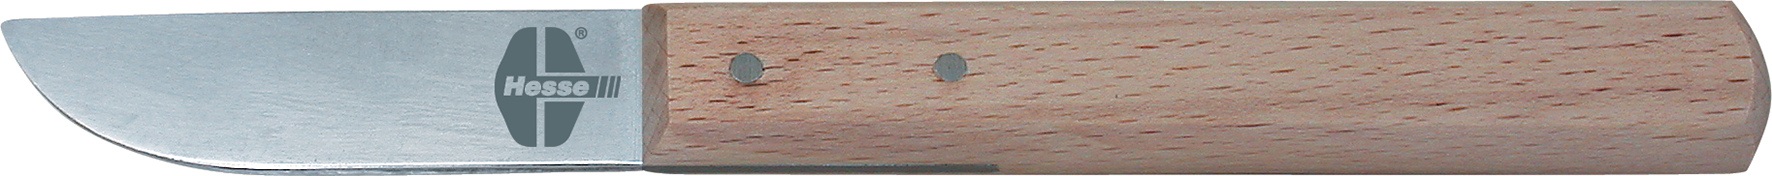 Lead knife length 192 mm blade length 70 mm wood HESSE